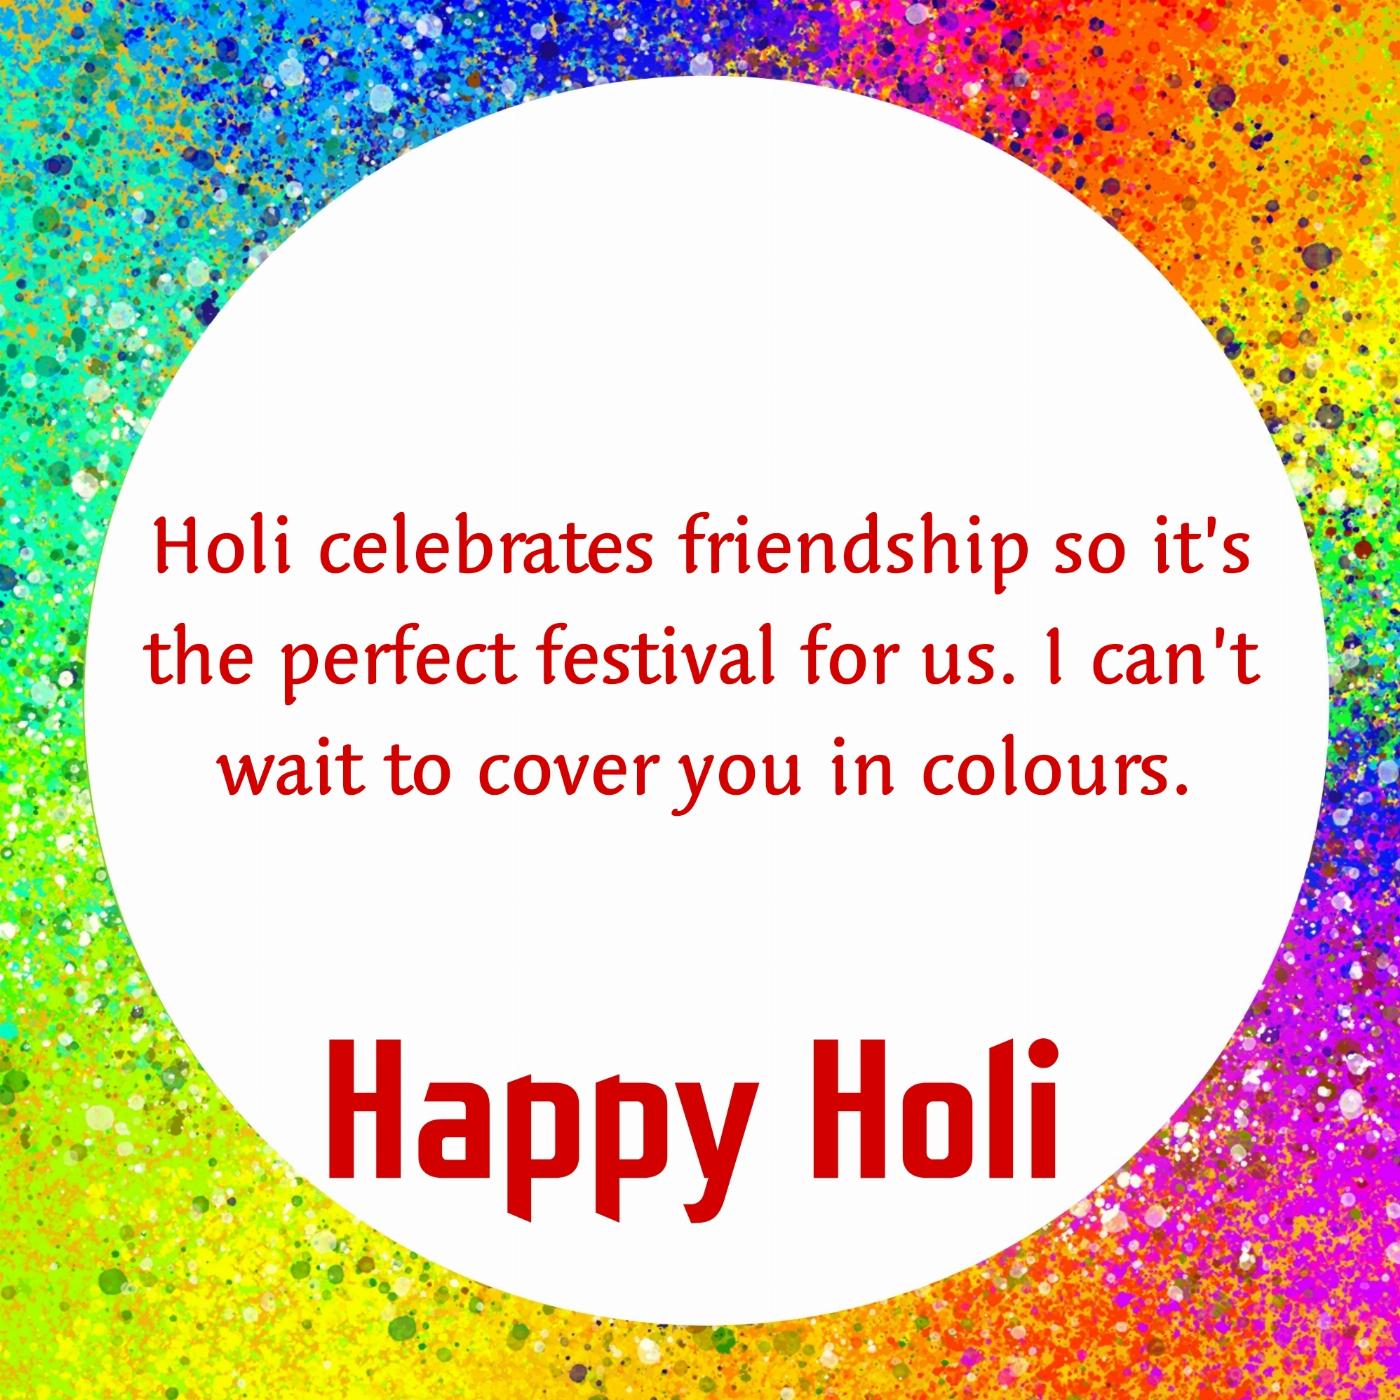 Holi celebrates friendship so its the perfect festival for us